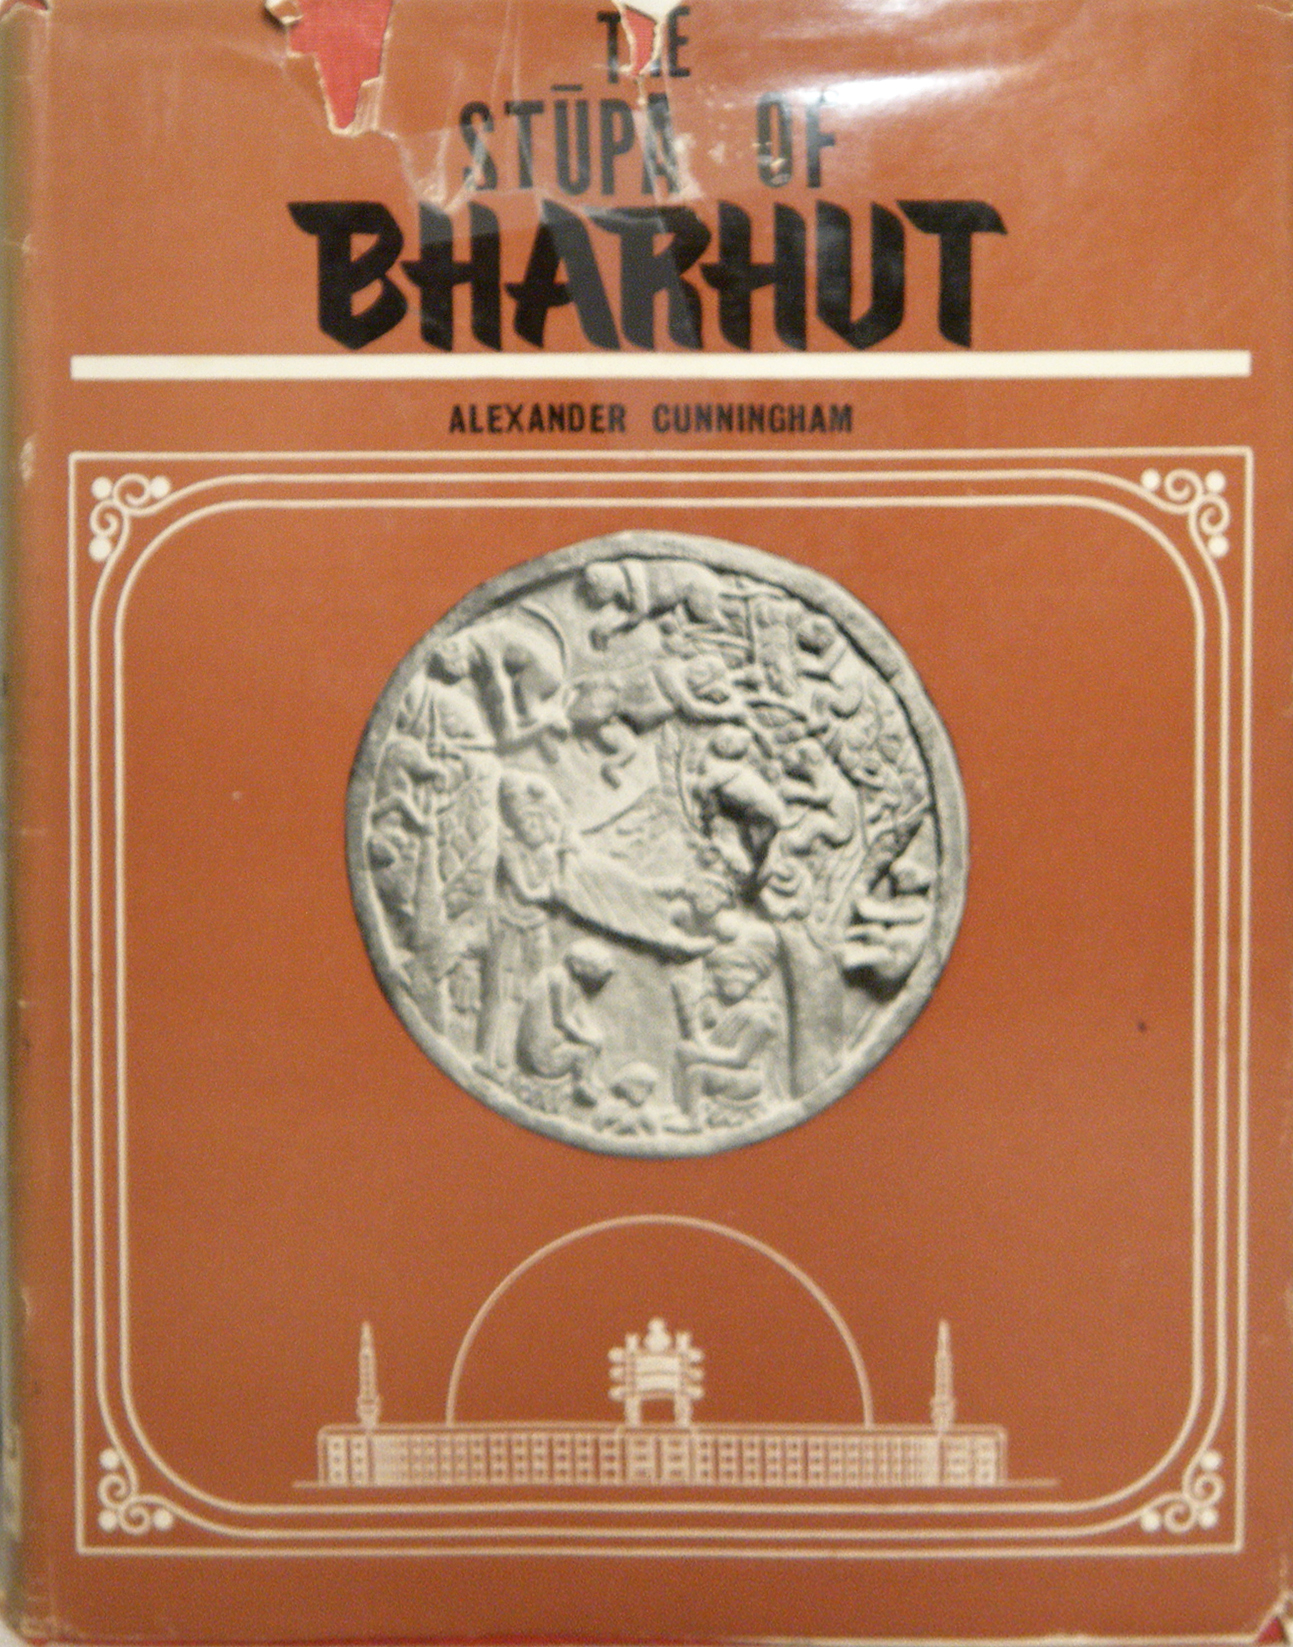 The Stūpa of Bharhut 1962-front.jpg